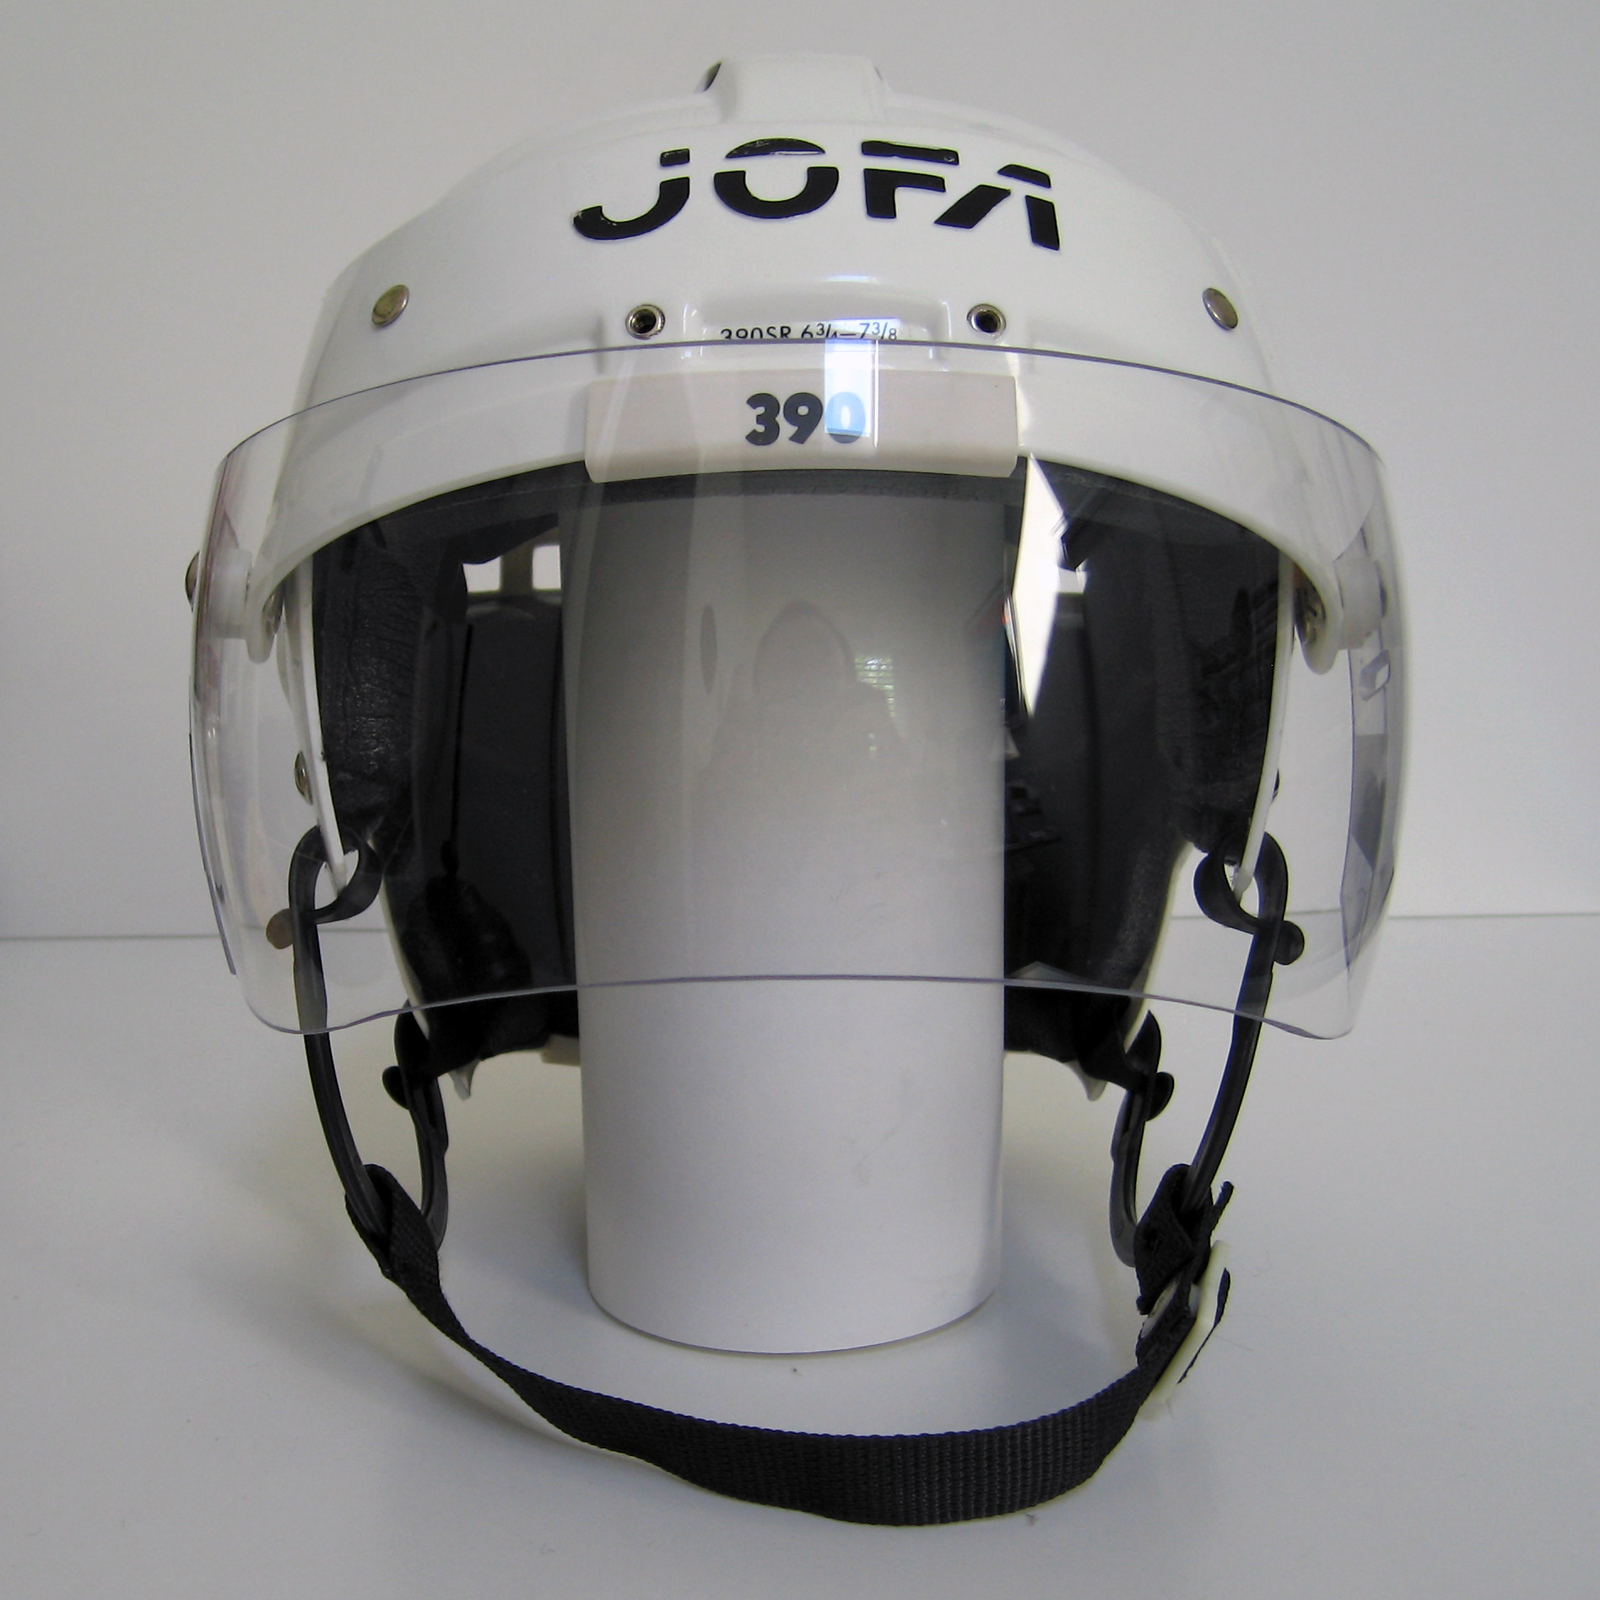 For anyone who loves JOFA helmets and Teemu Selanne : r/hockey